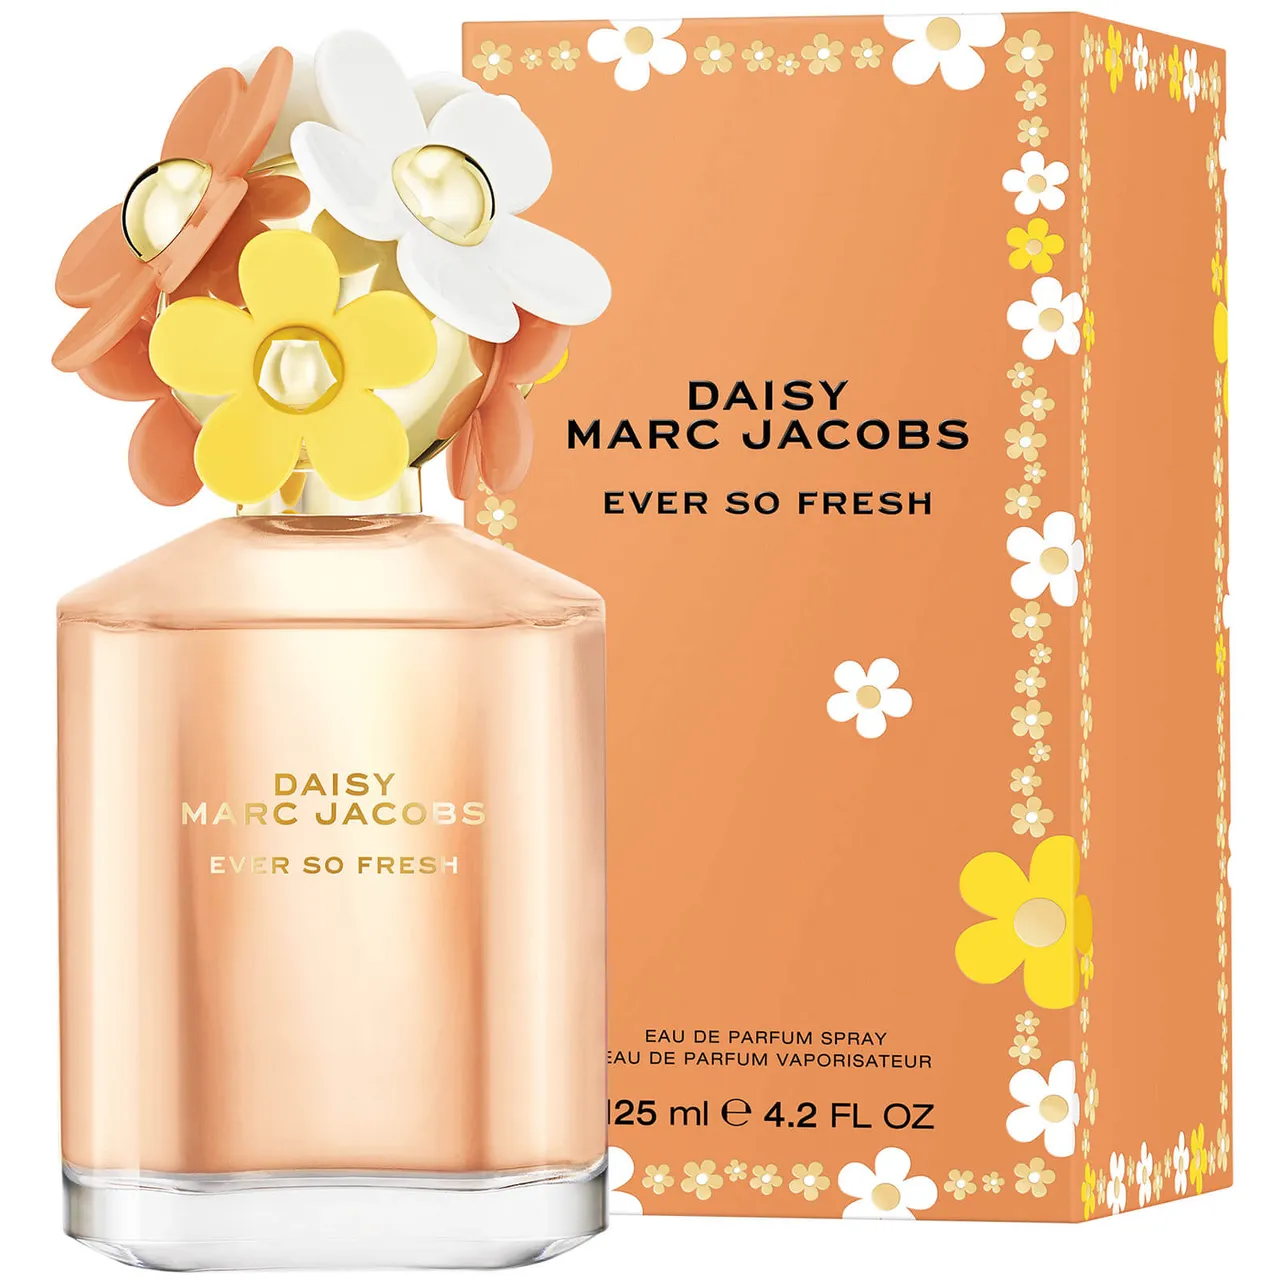 Marc Jacobs Daisy Ever So Fresh Eau de Parfum for Women 125ml